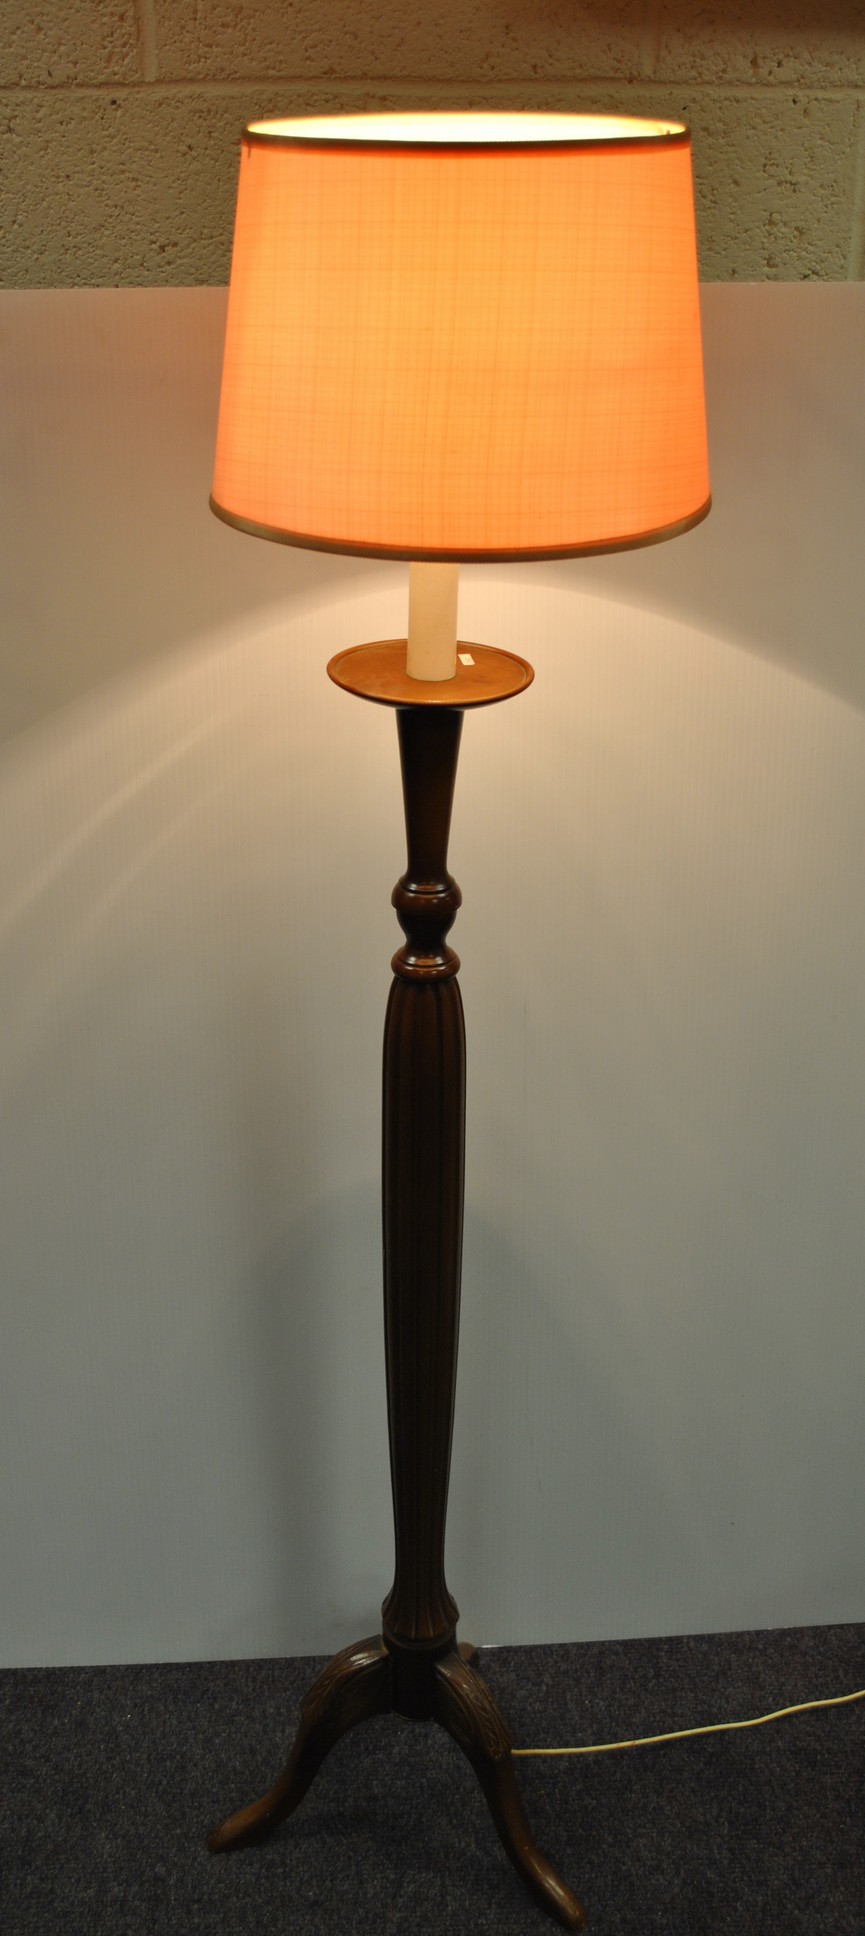 Standard Lamp and Shade